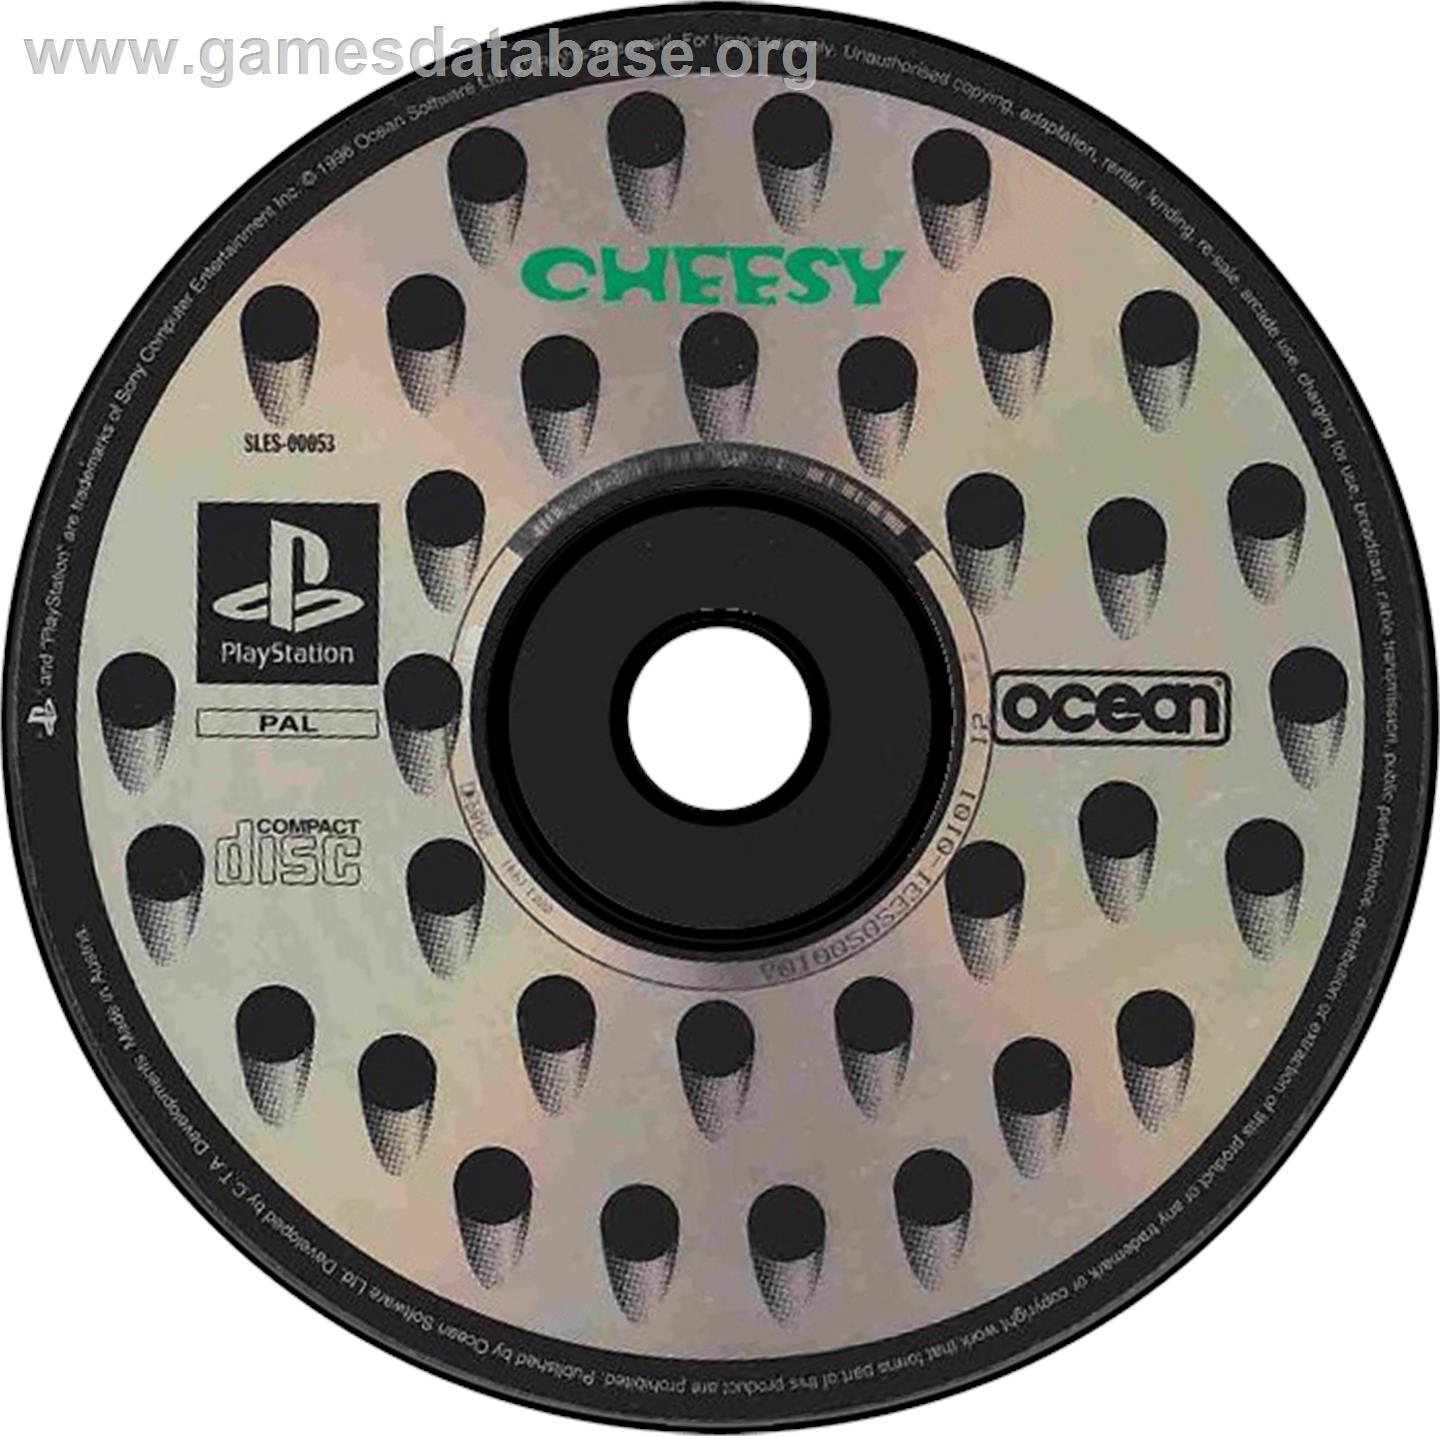 Cheesy - Sony Playstation - Artwork - Disc